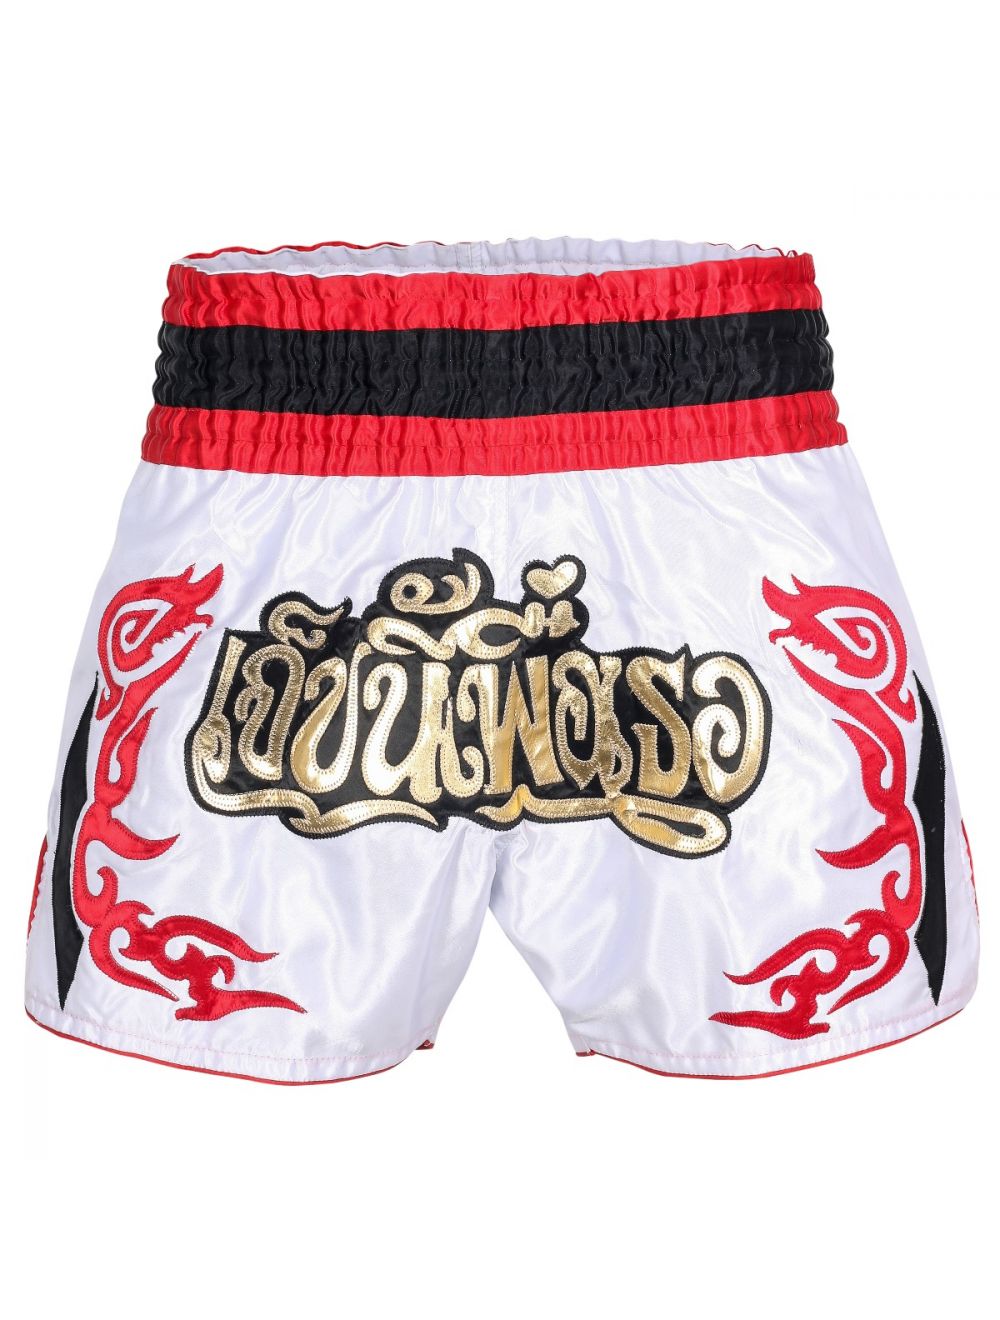 Muay Thai Kick Boxing Red-Black Color Shorts MMA Trunks Satin fabric,Size M-XXXL 